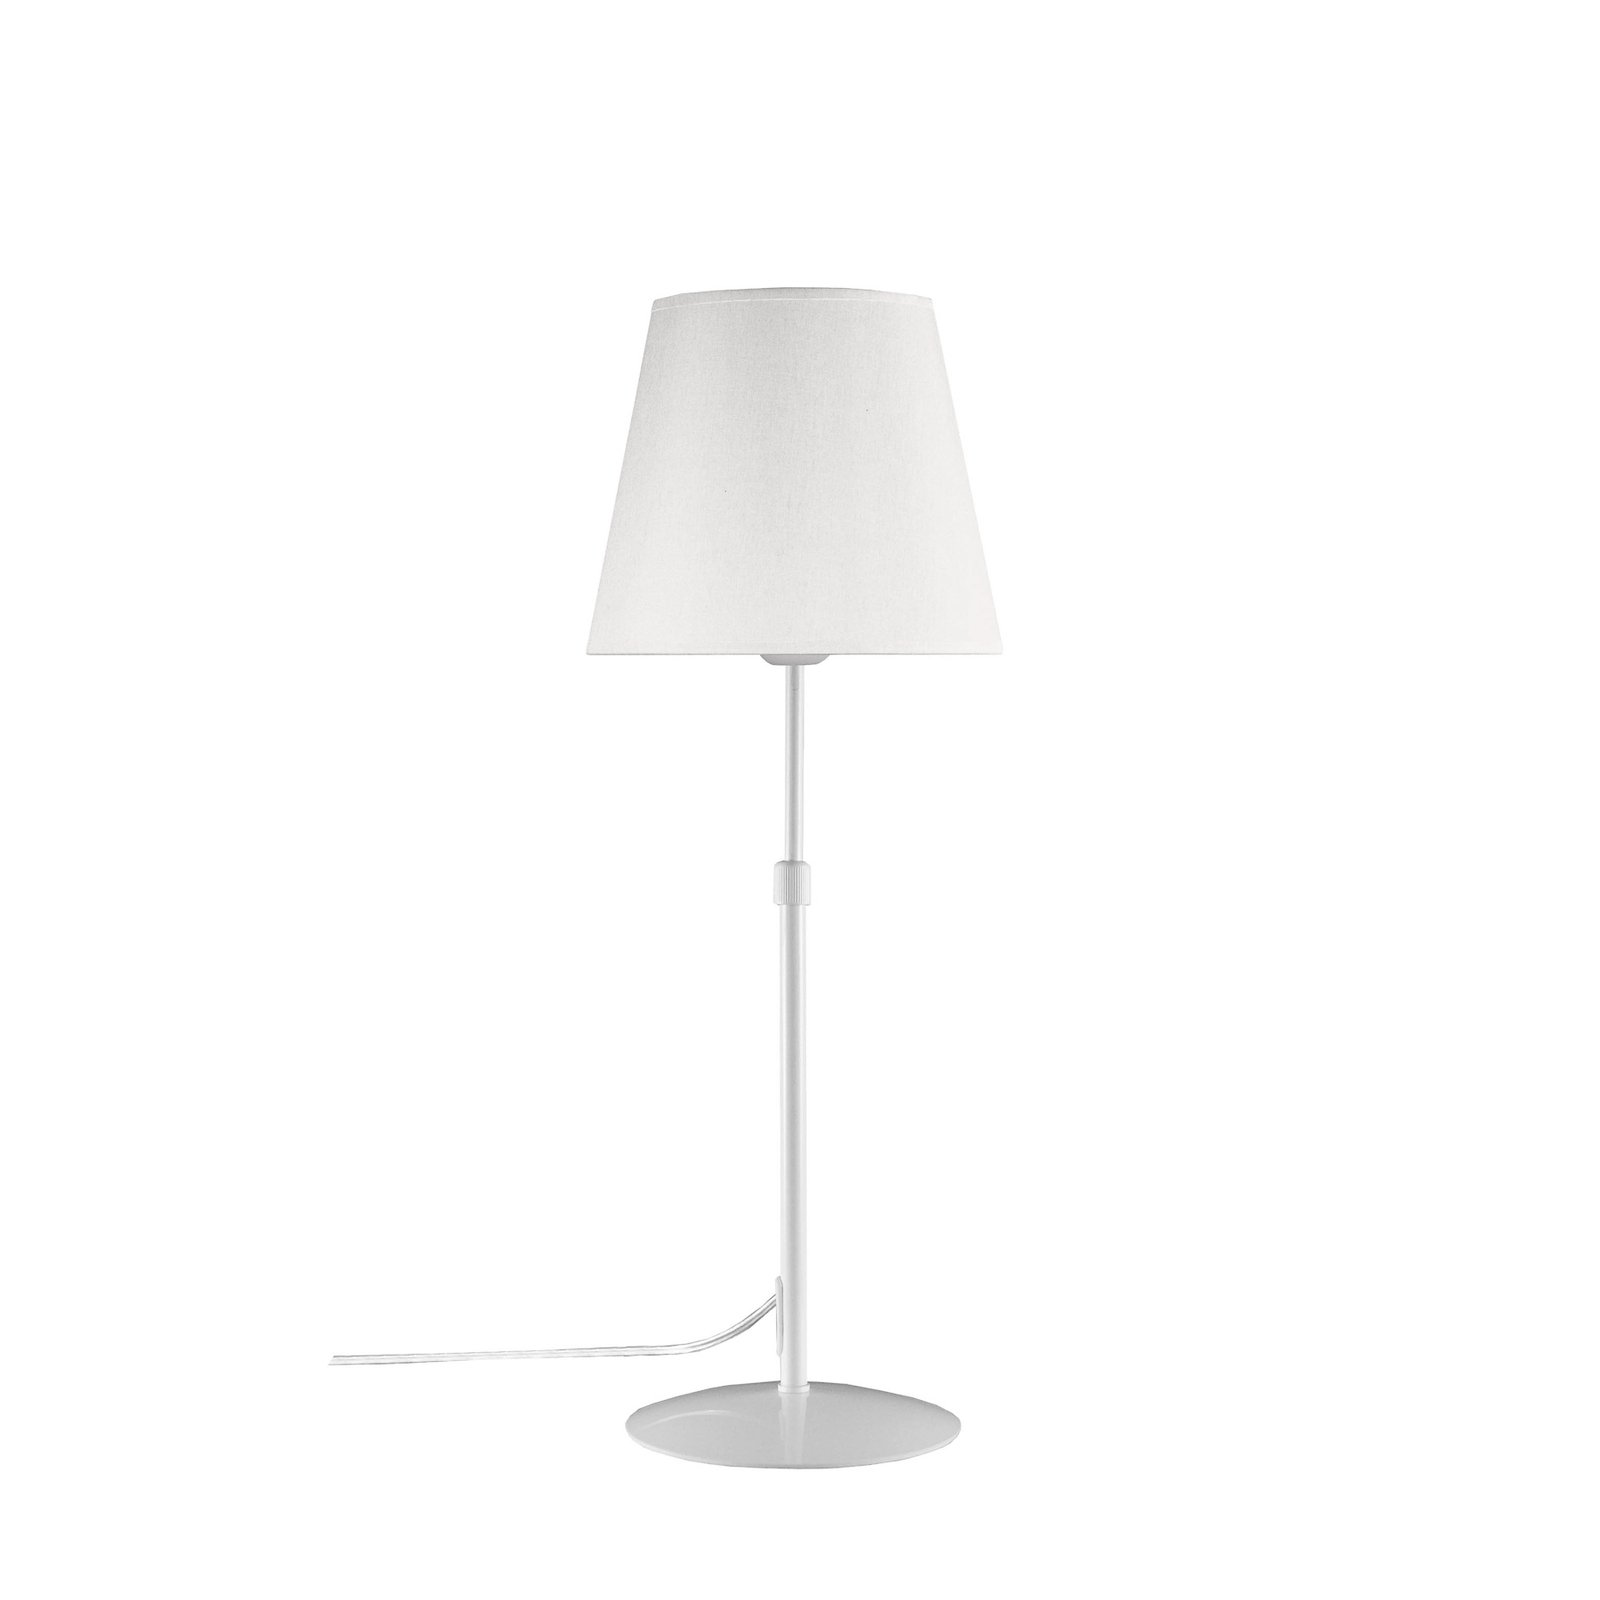 Aluminor Store stolní lampa, bílá/bílá